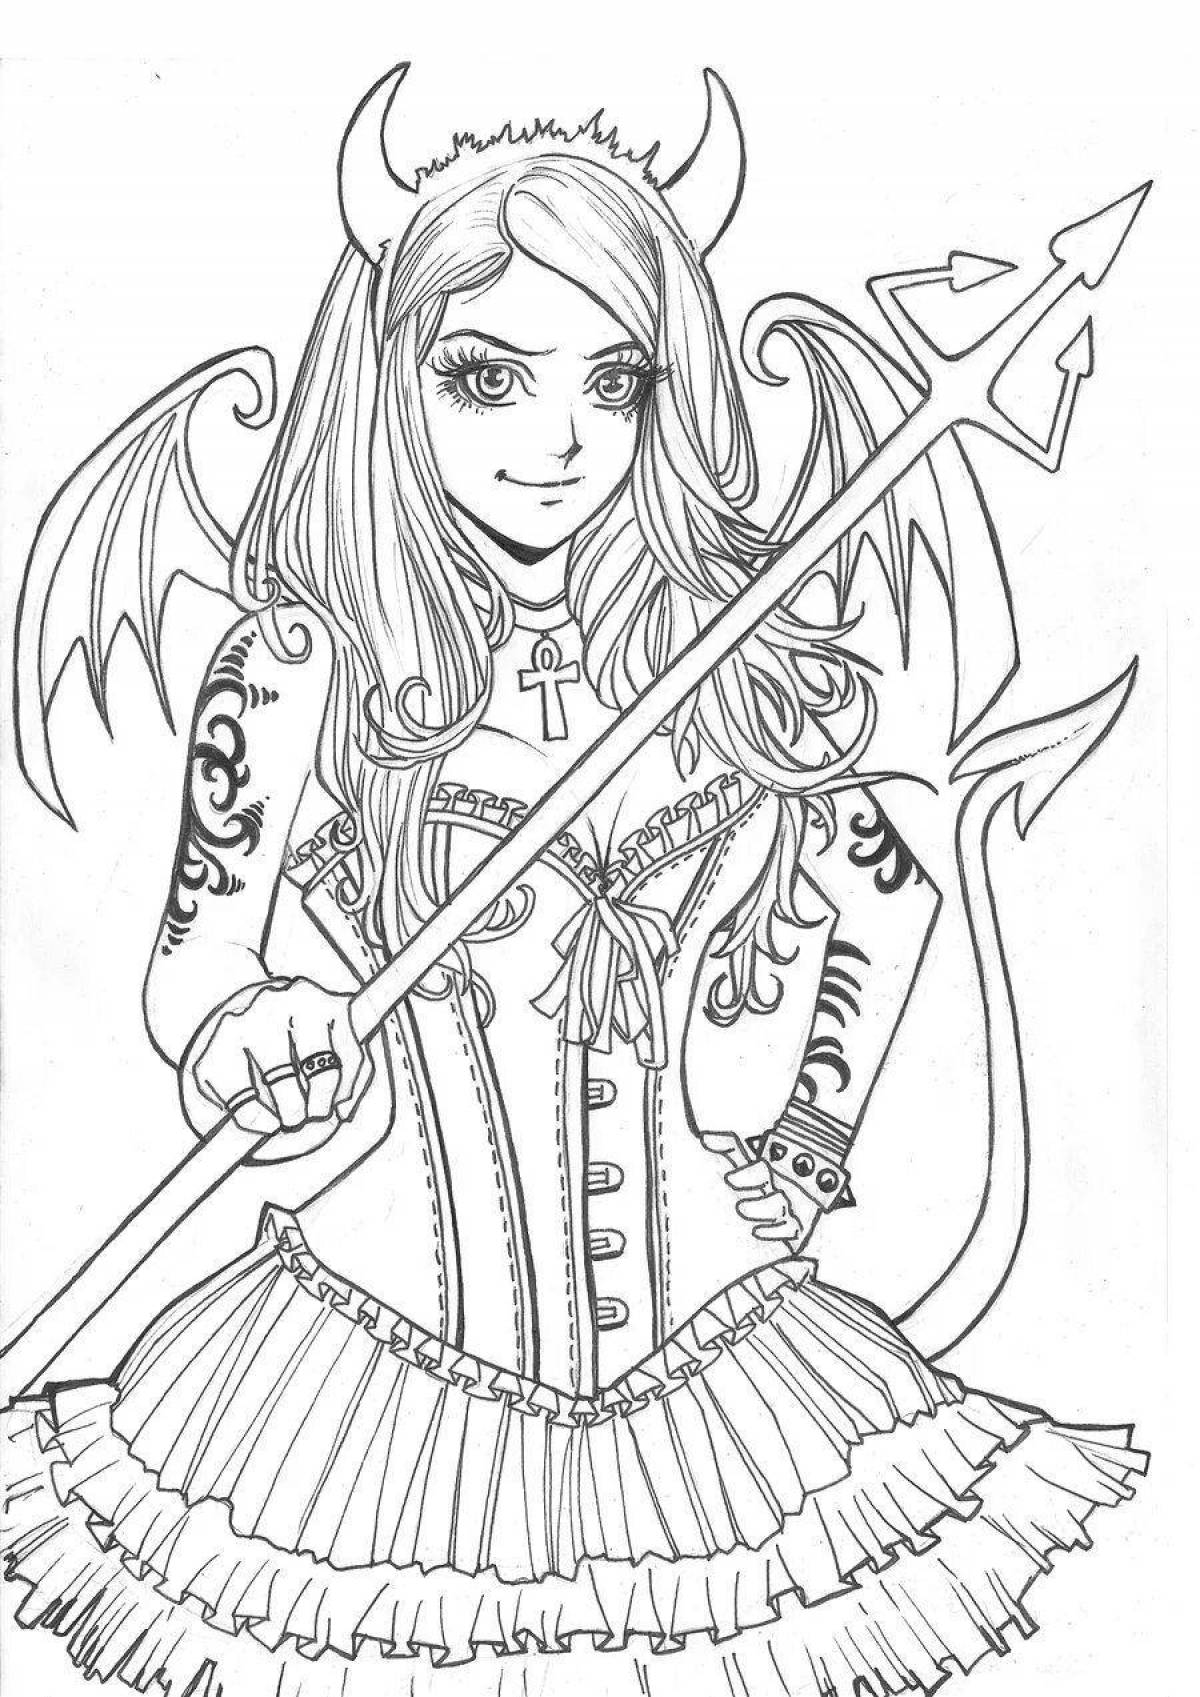 Charming demon girl coloring book